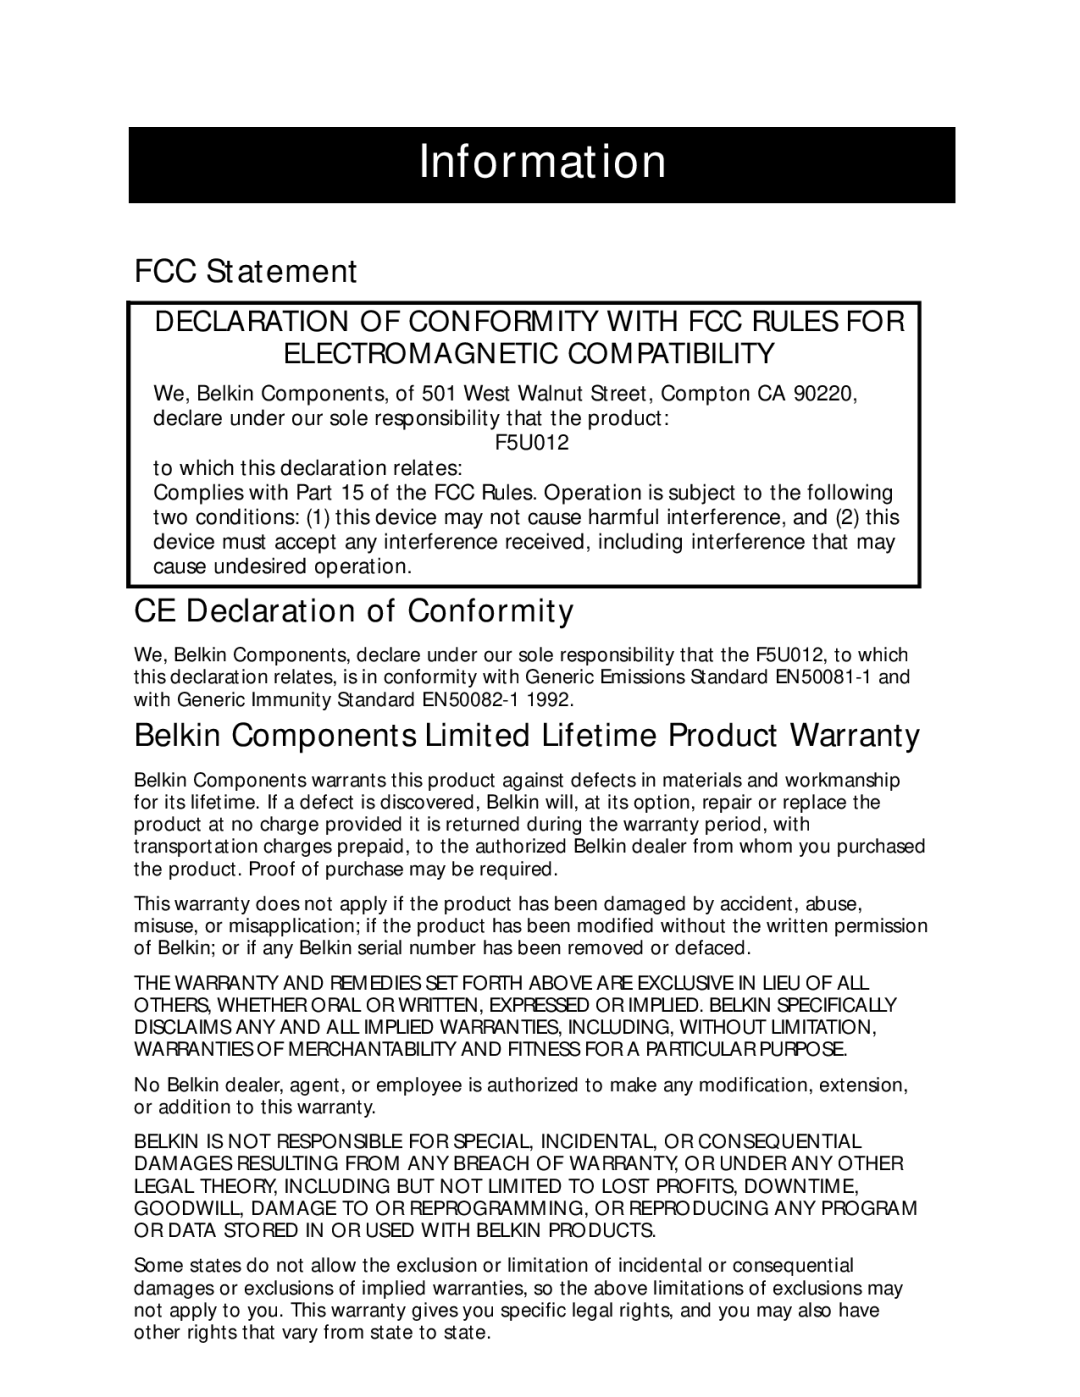 Belkin P73213-A user manual Information, FCC Statement, CE Declaration of Conformity 